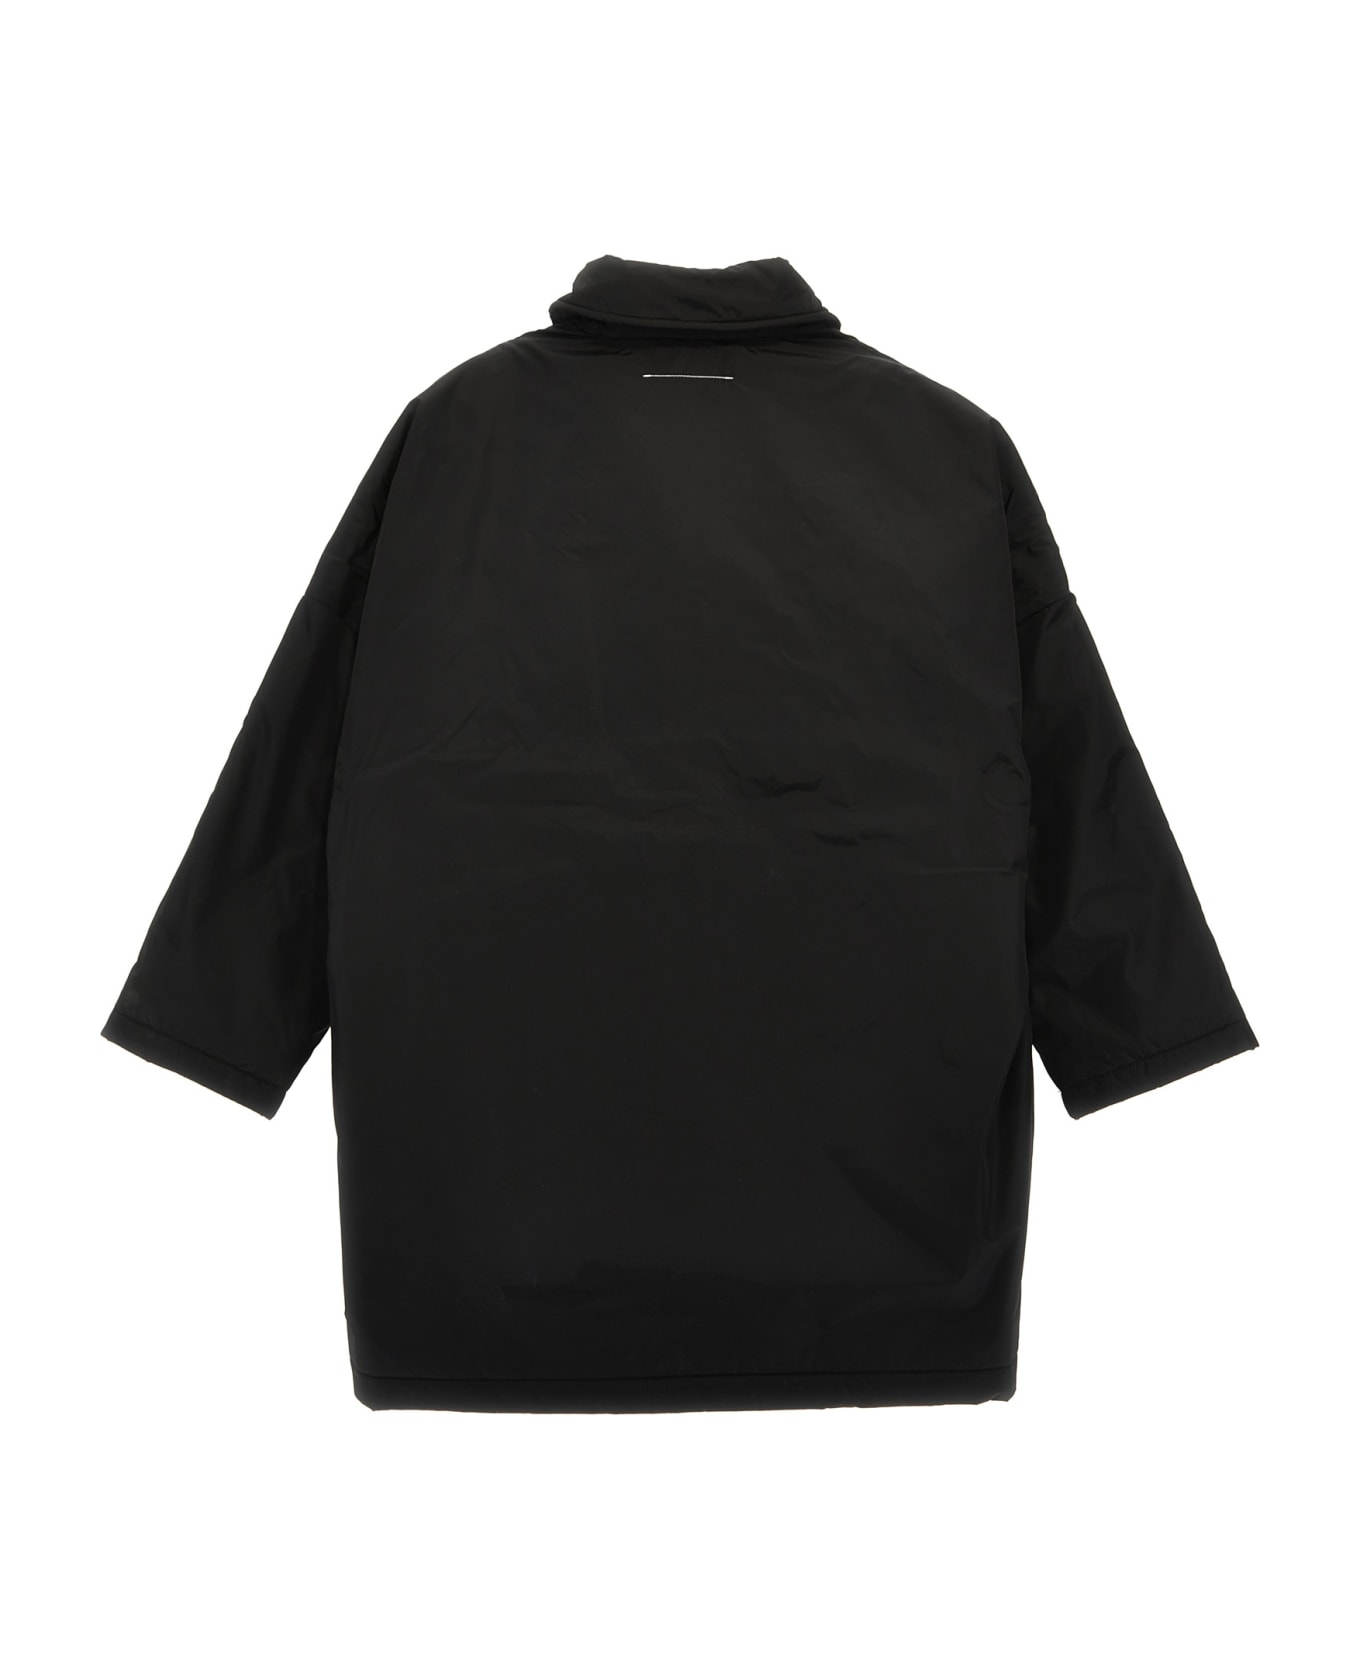 MM6 Maison Margiela Technical Fabric Coat - Black  